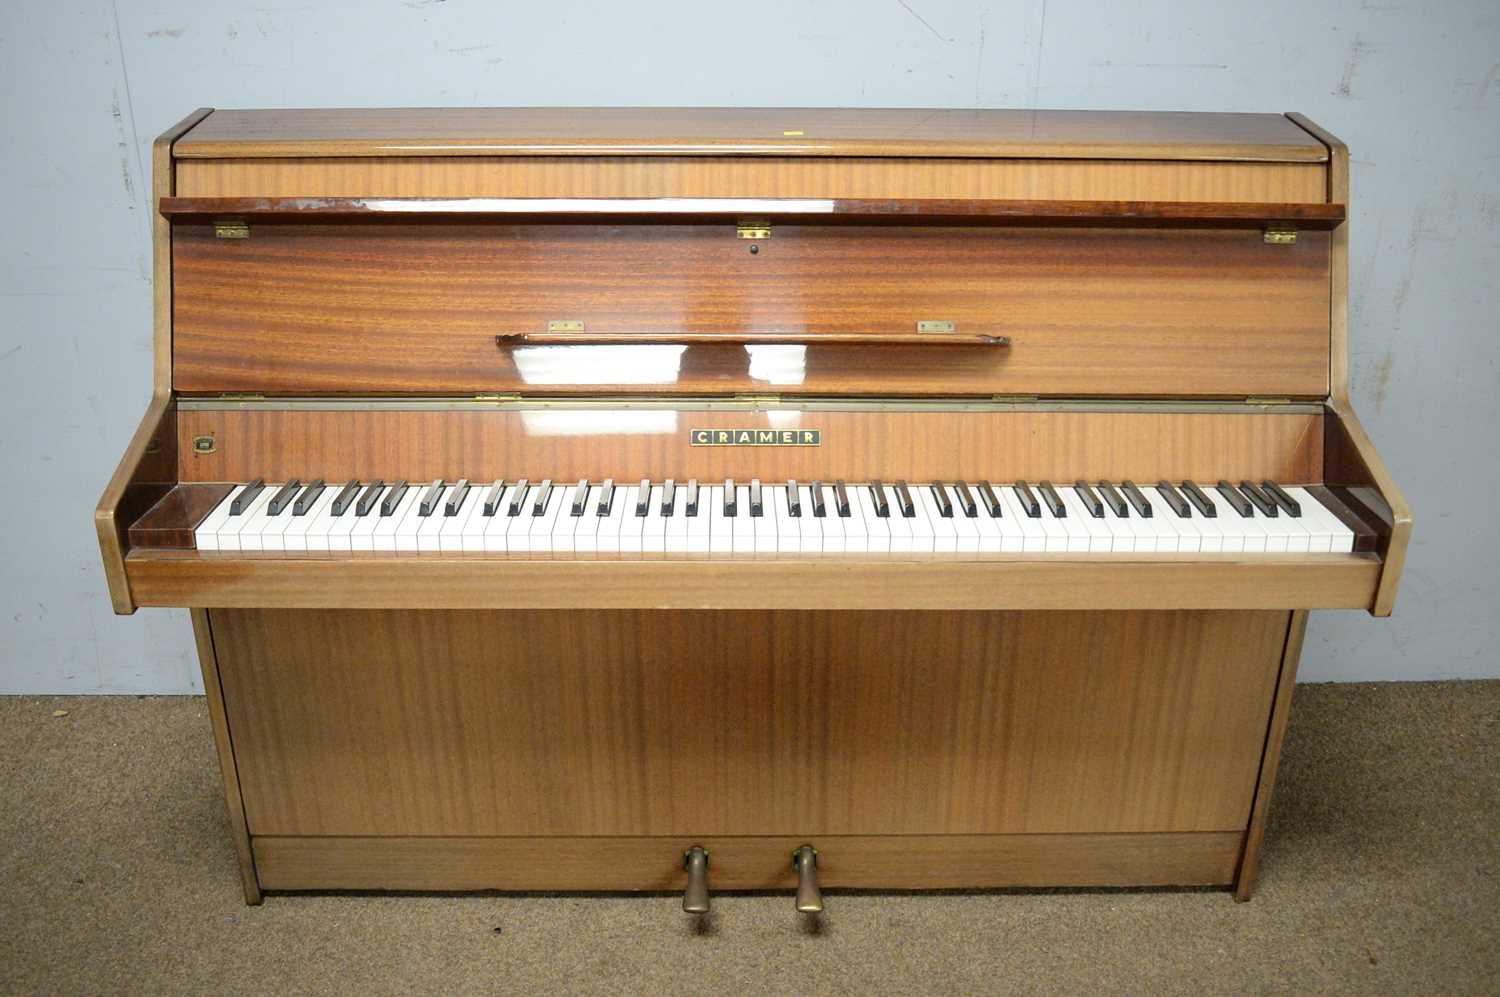 Mahogany-cased upright overstrung piano.